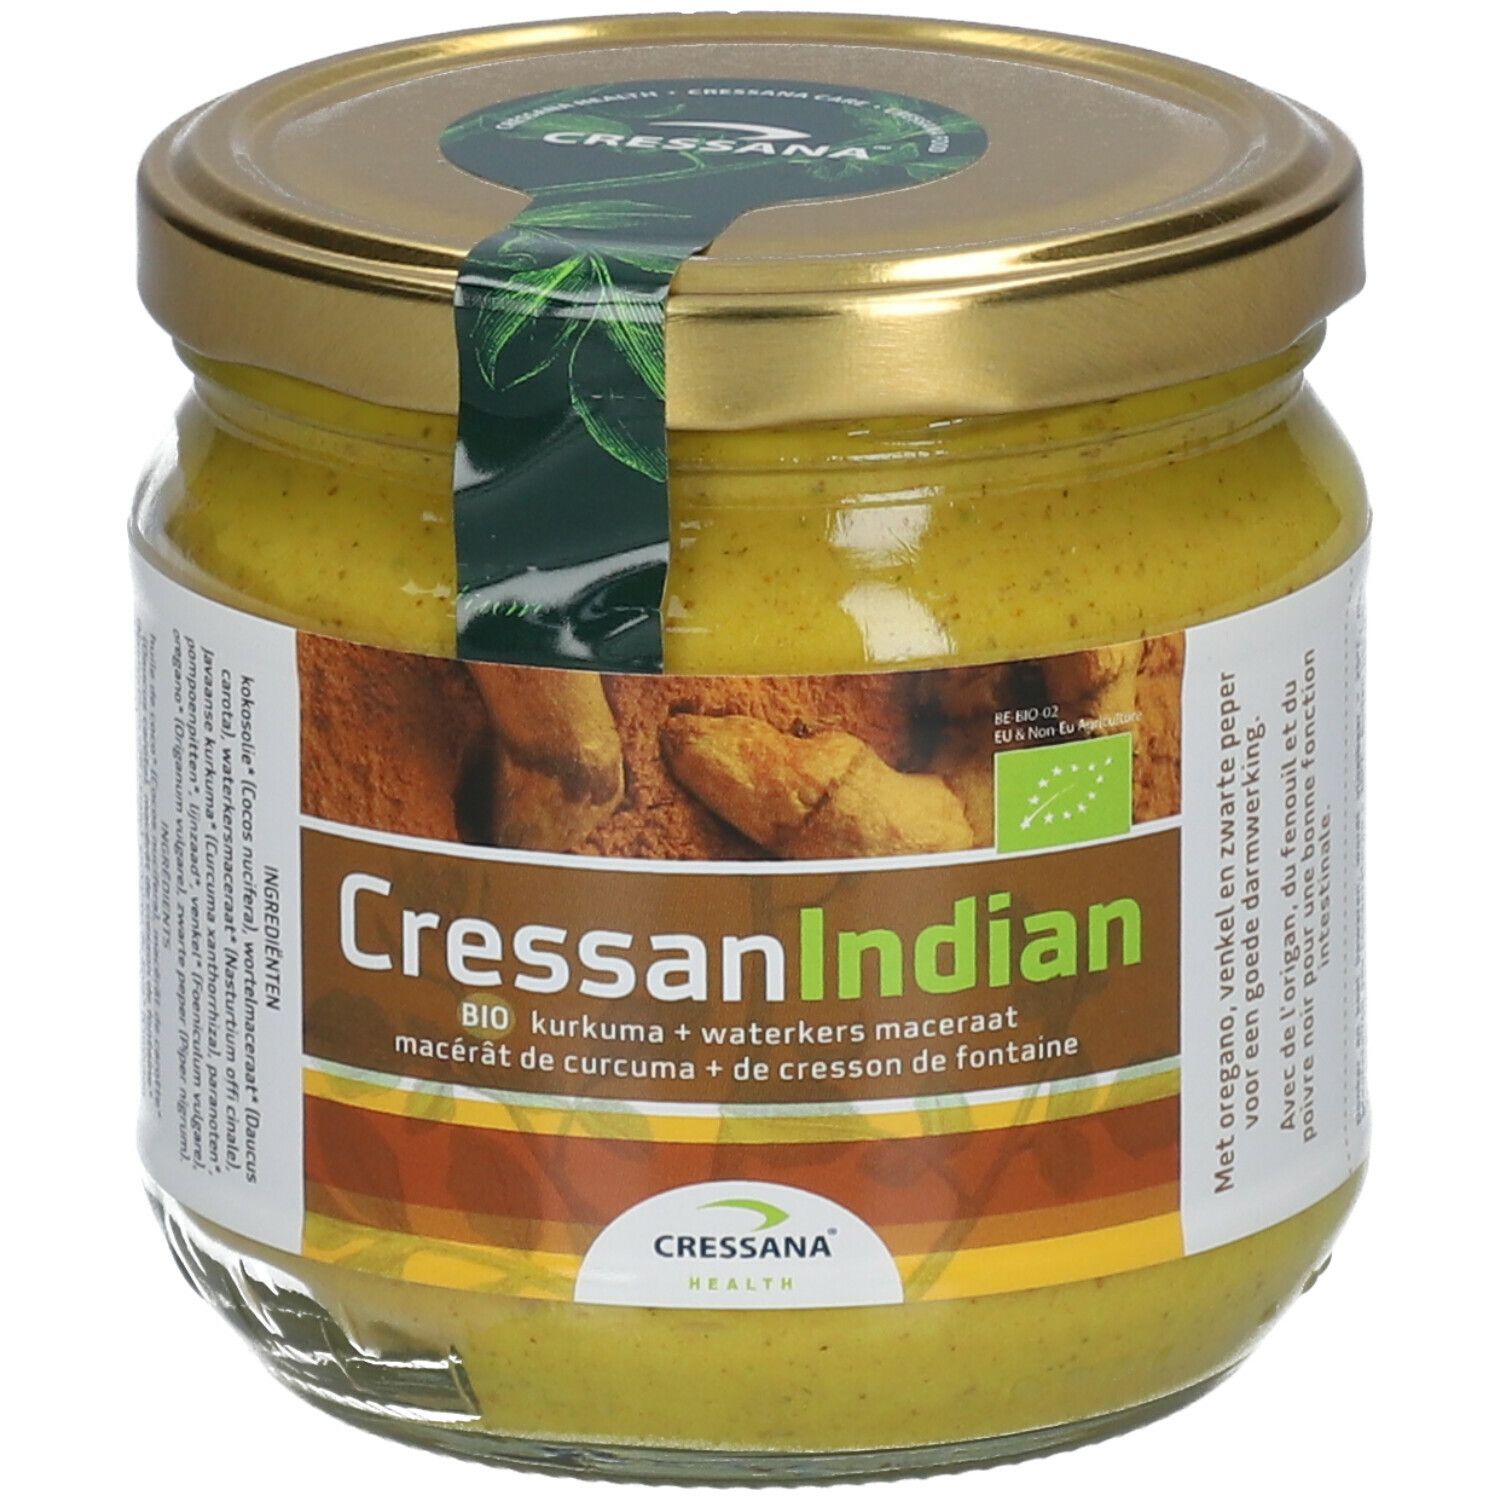 Cressana® CressanIndian